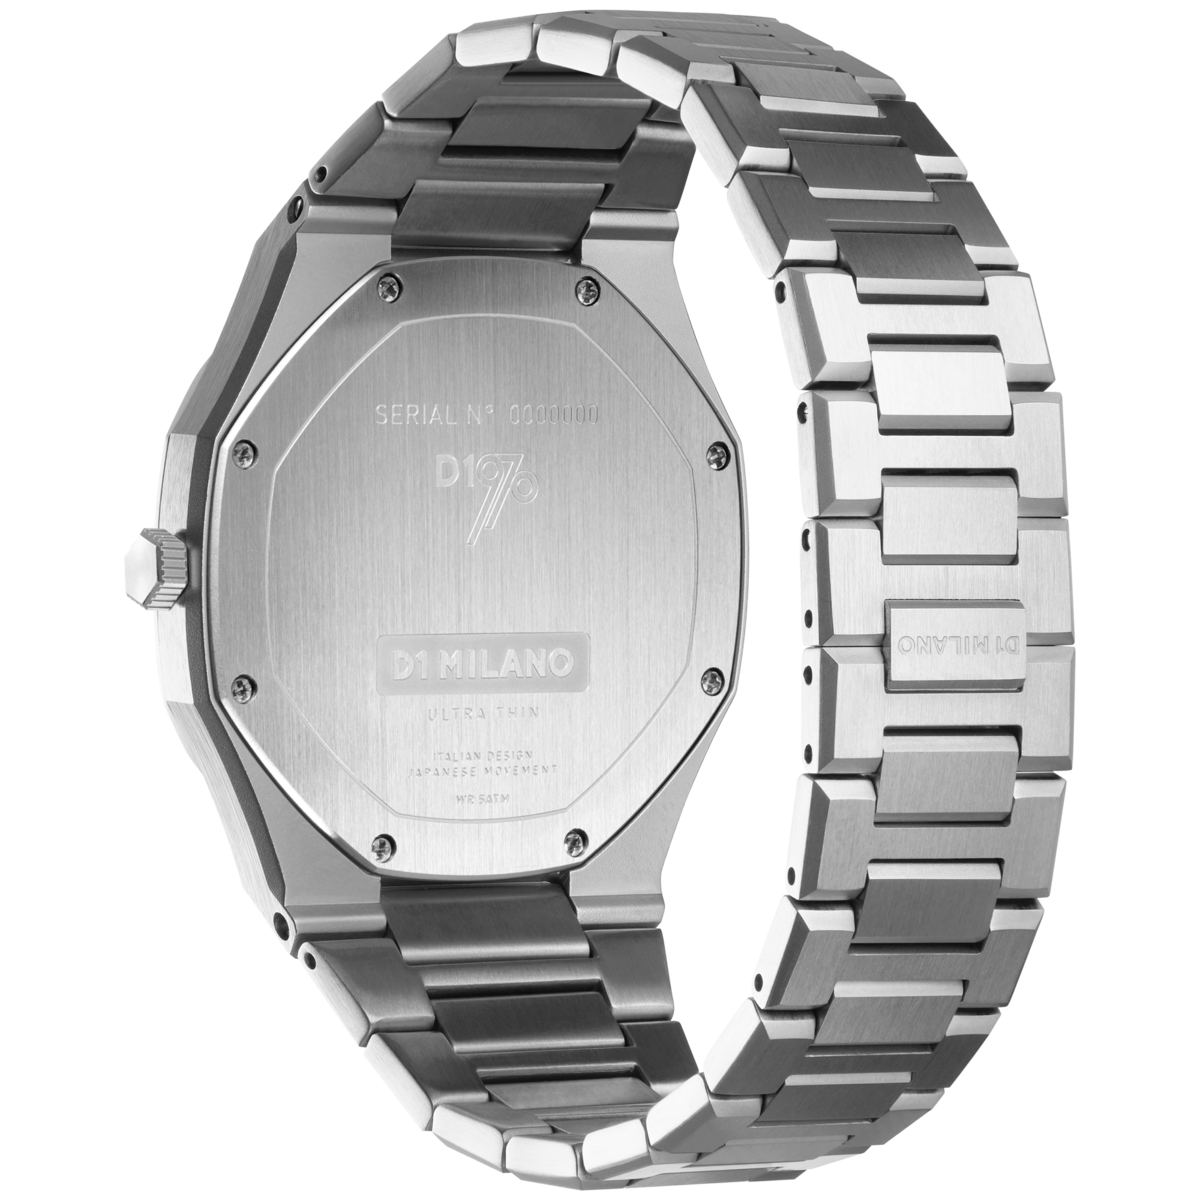 Men's Ultra Thin Bracelet Watch D1-UTBJ03 D1 Milano